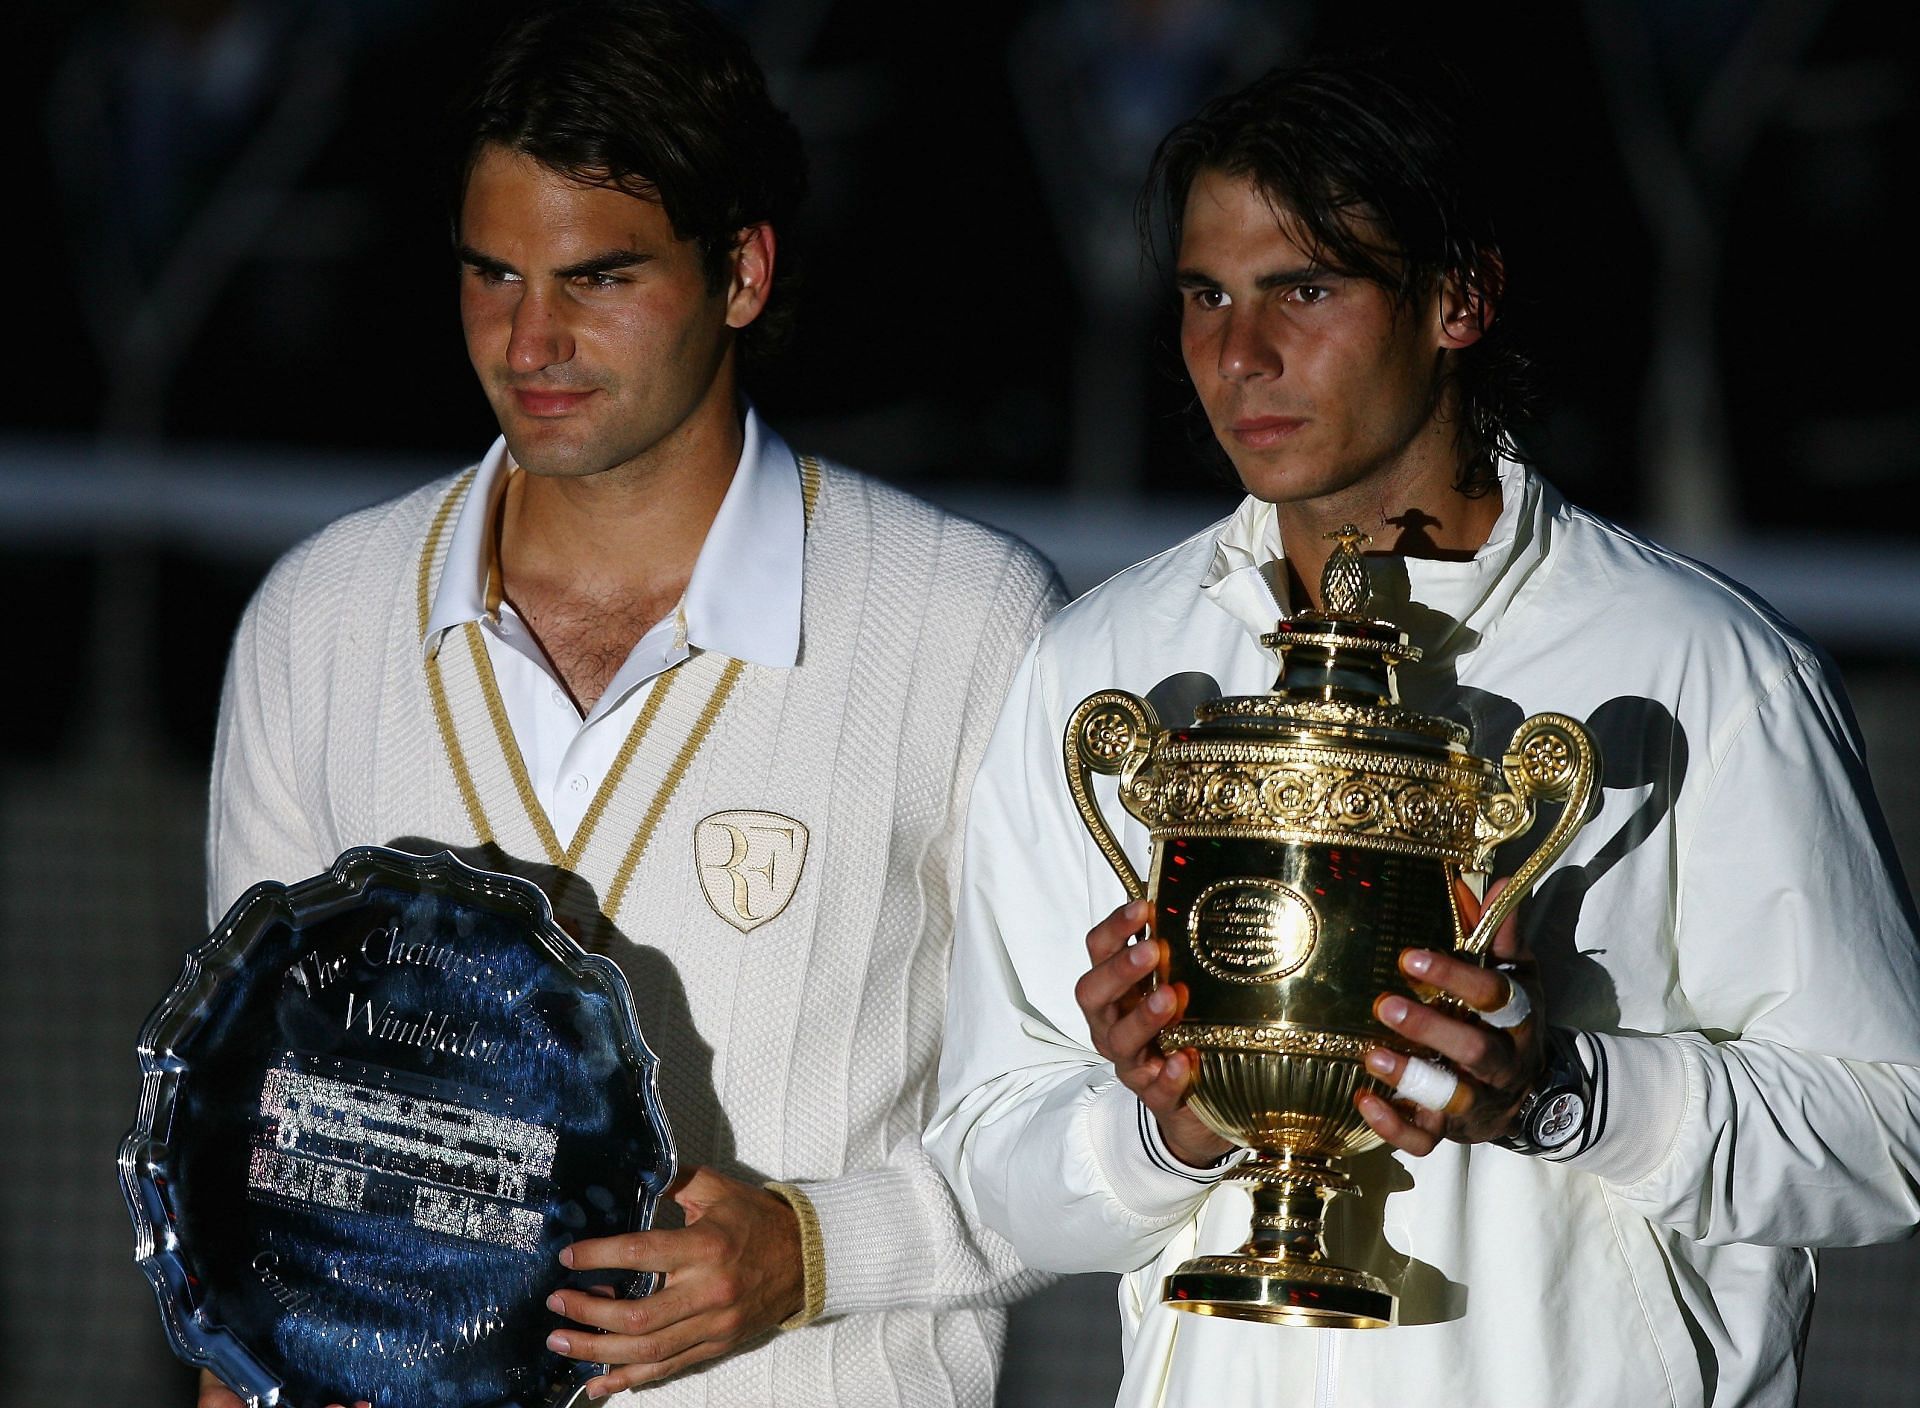 Rafael Nadal won Wimbledon in 2008